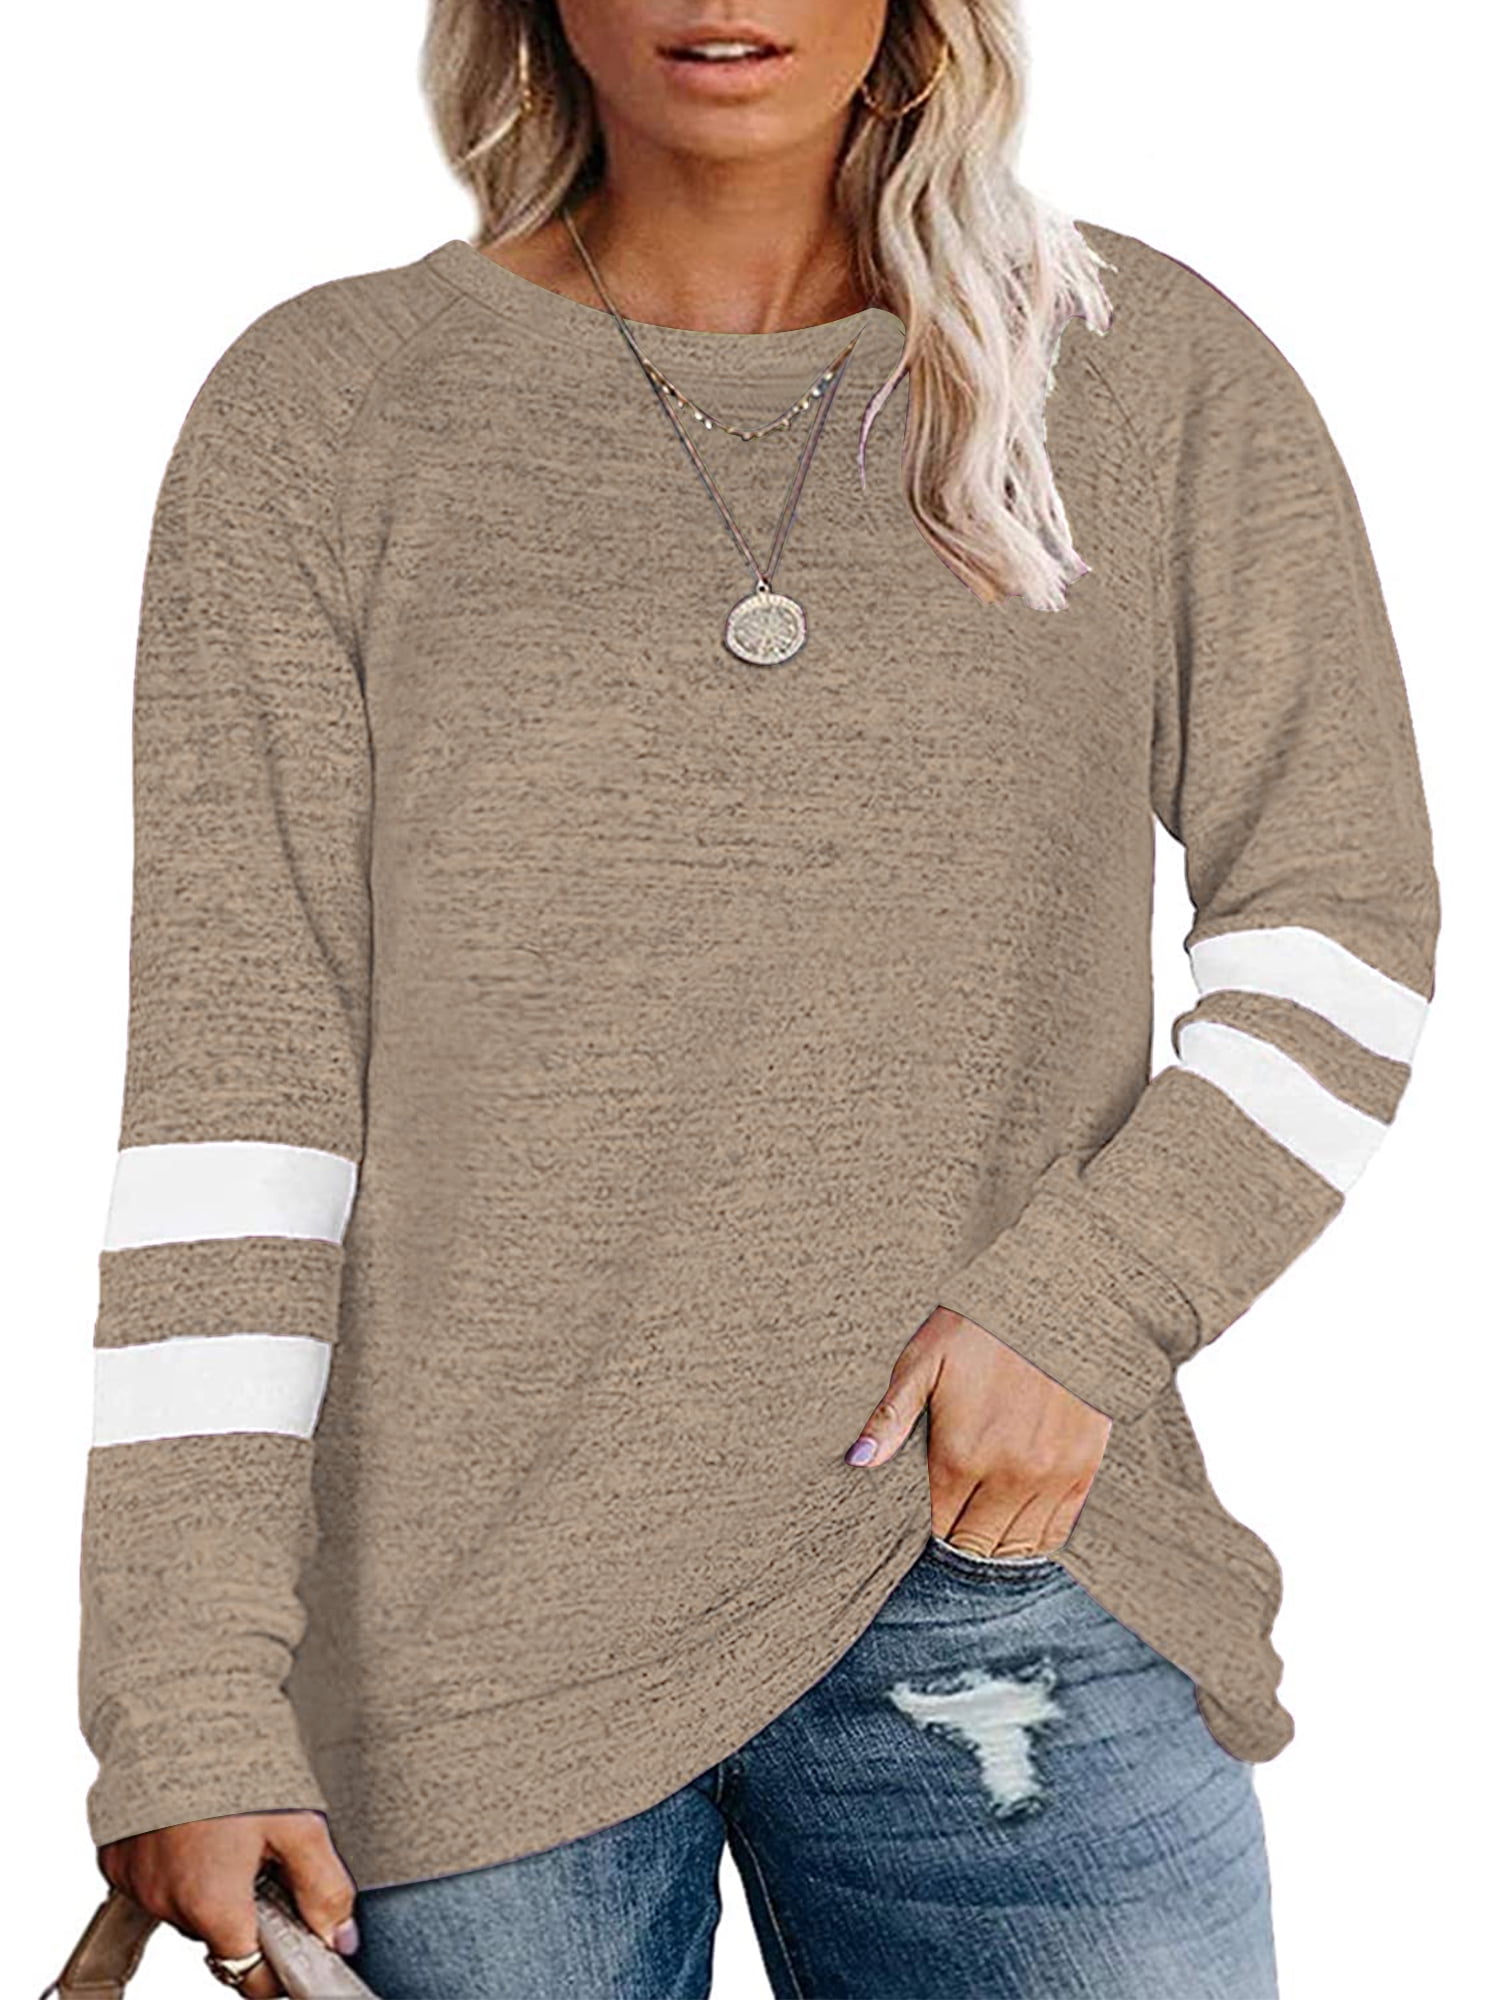 Plus Size Sweatshirts for Women Color block Crewneck Tunic Striped Tops ...